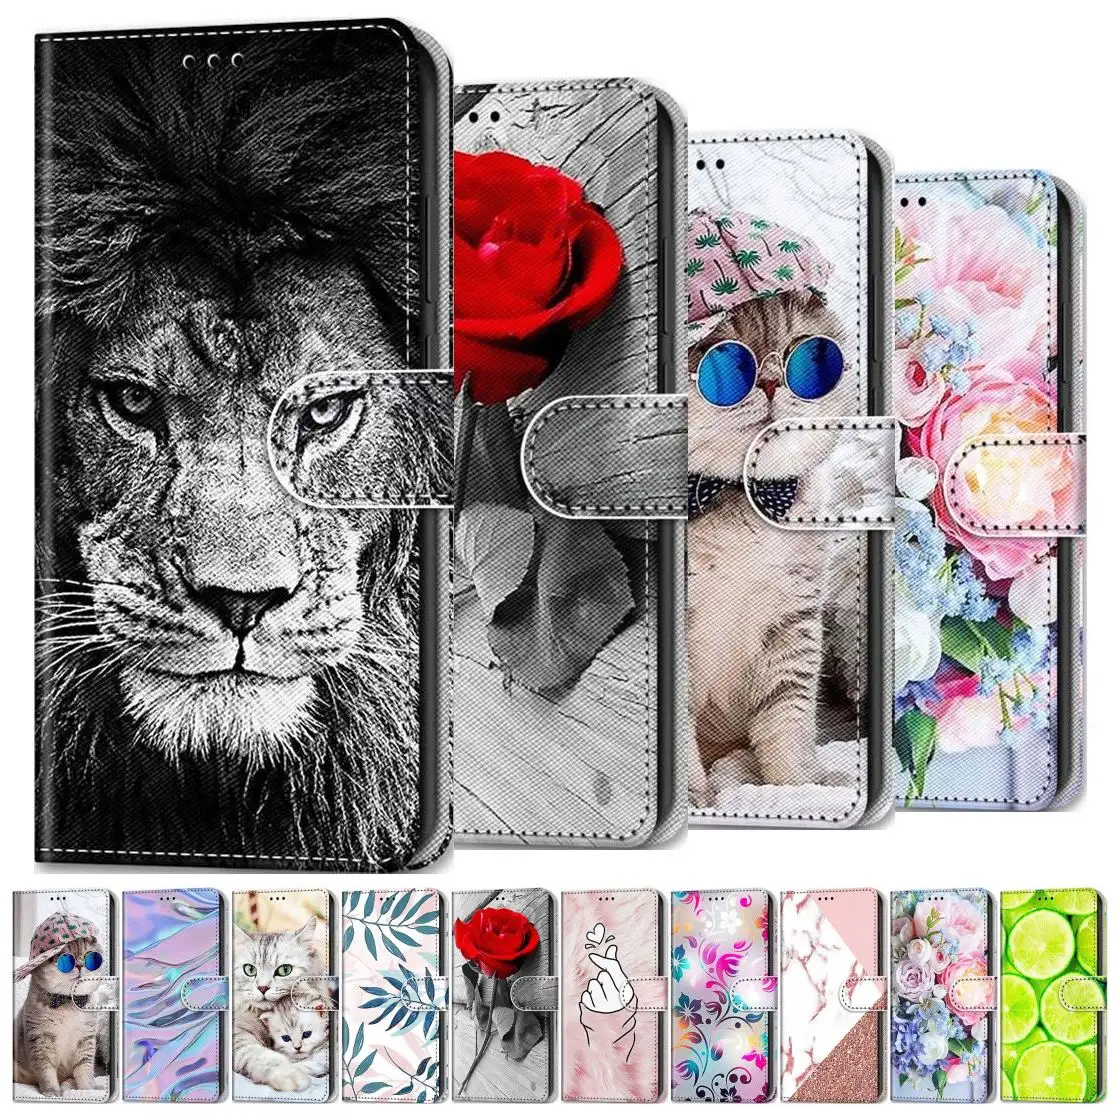 Rose Lion Painted Phone Shell für Etui Samsung Galaxy S5 S6 S7 S8 S9 S10 Plus S10E S20 Fe Niedliche lustige Kartens teck platz Hülle A42 5G DP08F